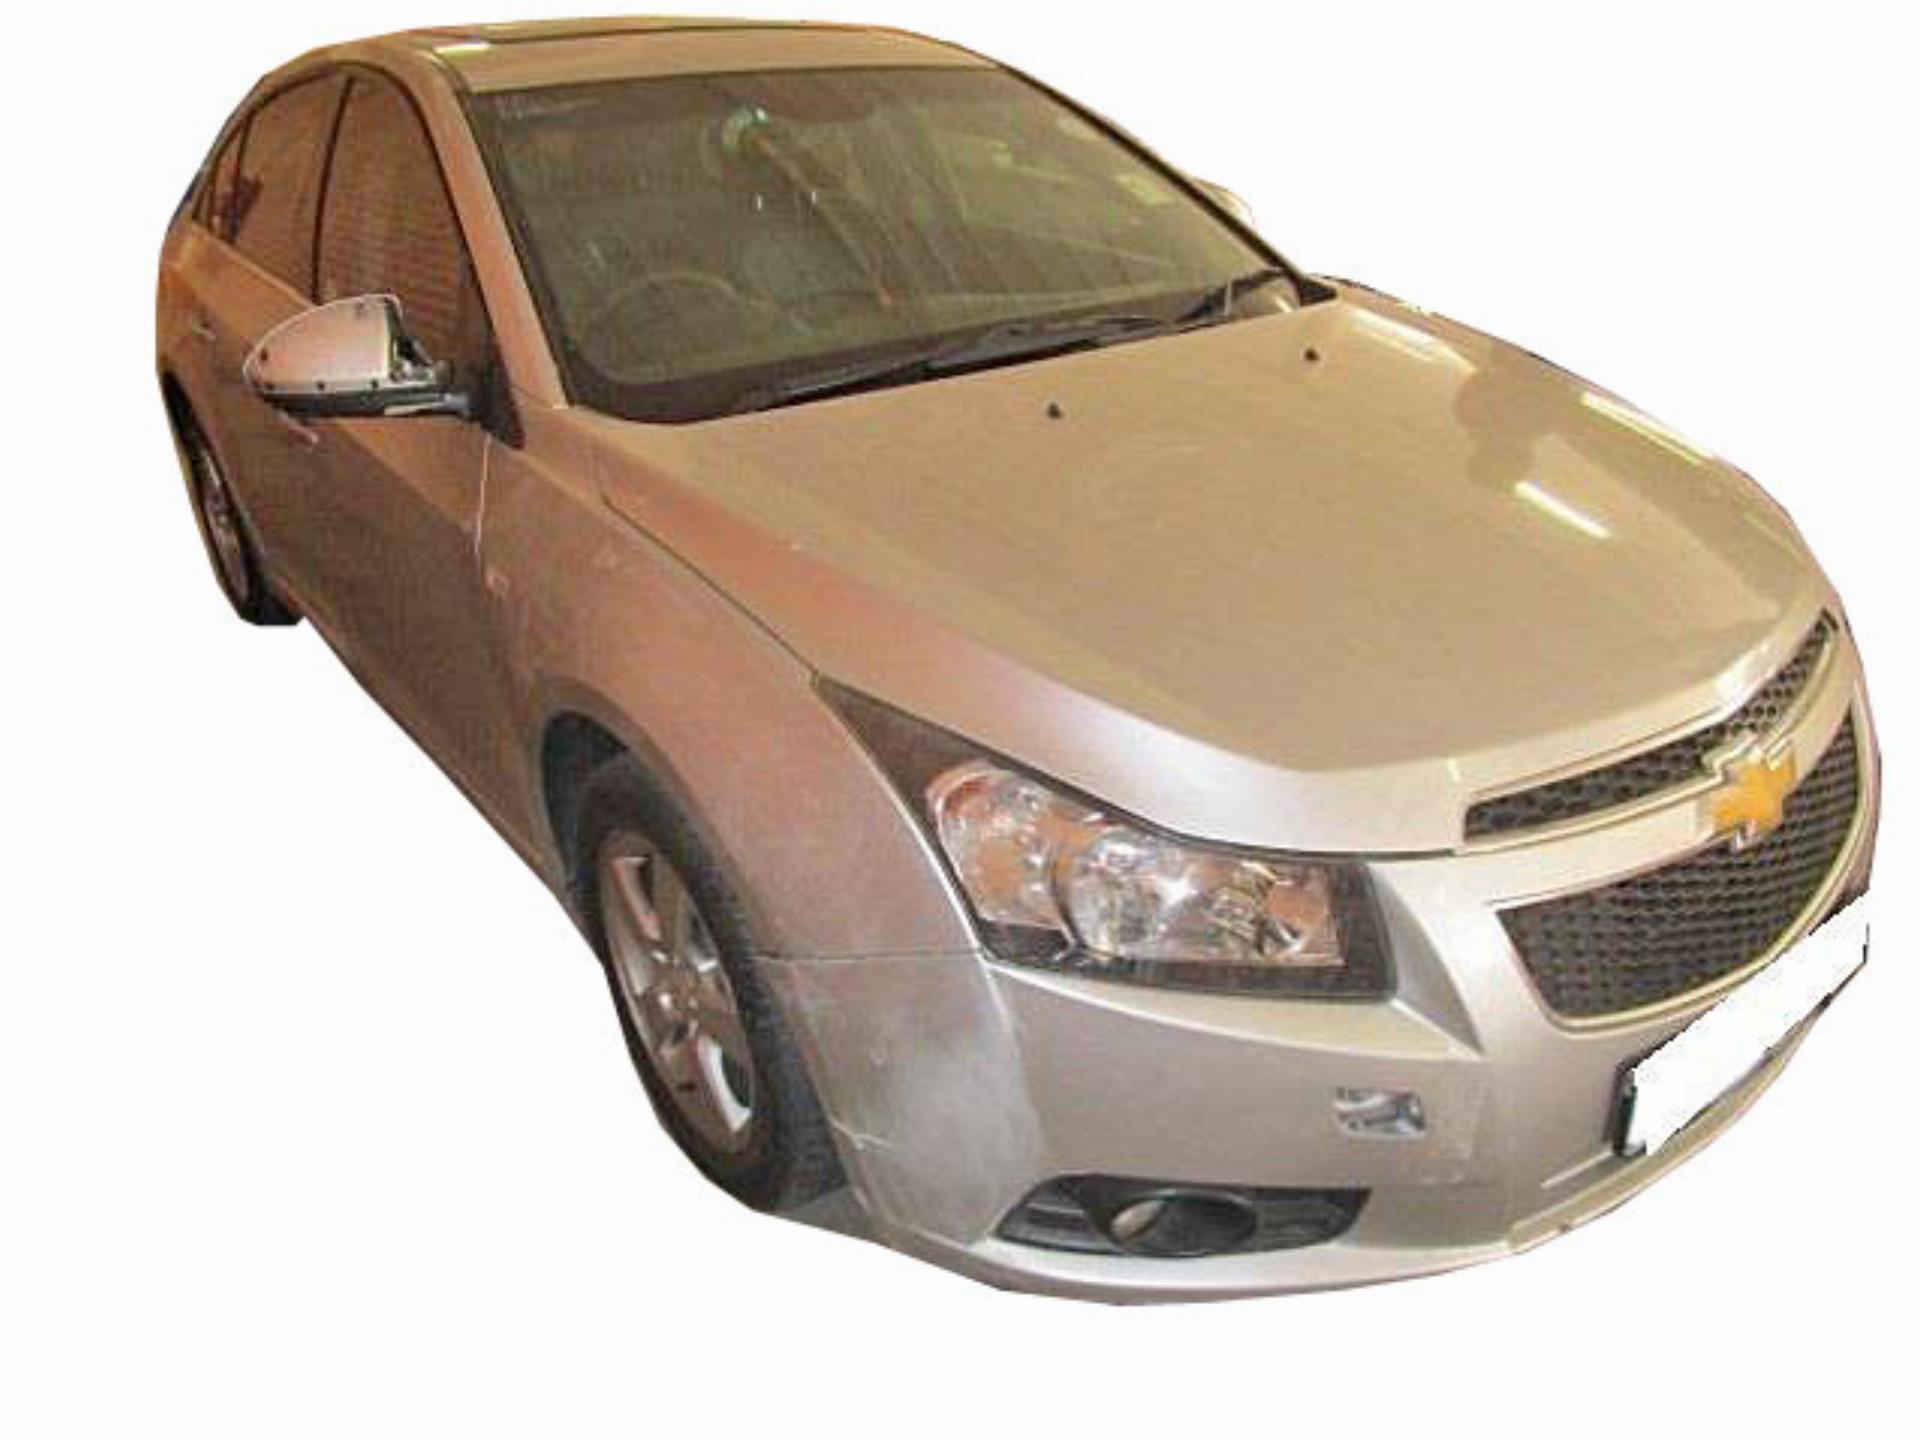 Repossessed Chevrolet Cruze 1.8 LS 2012 on auction MC50189